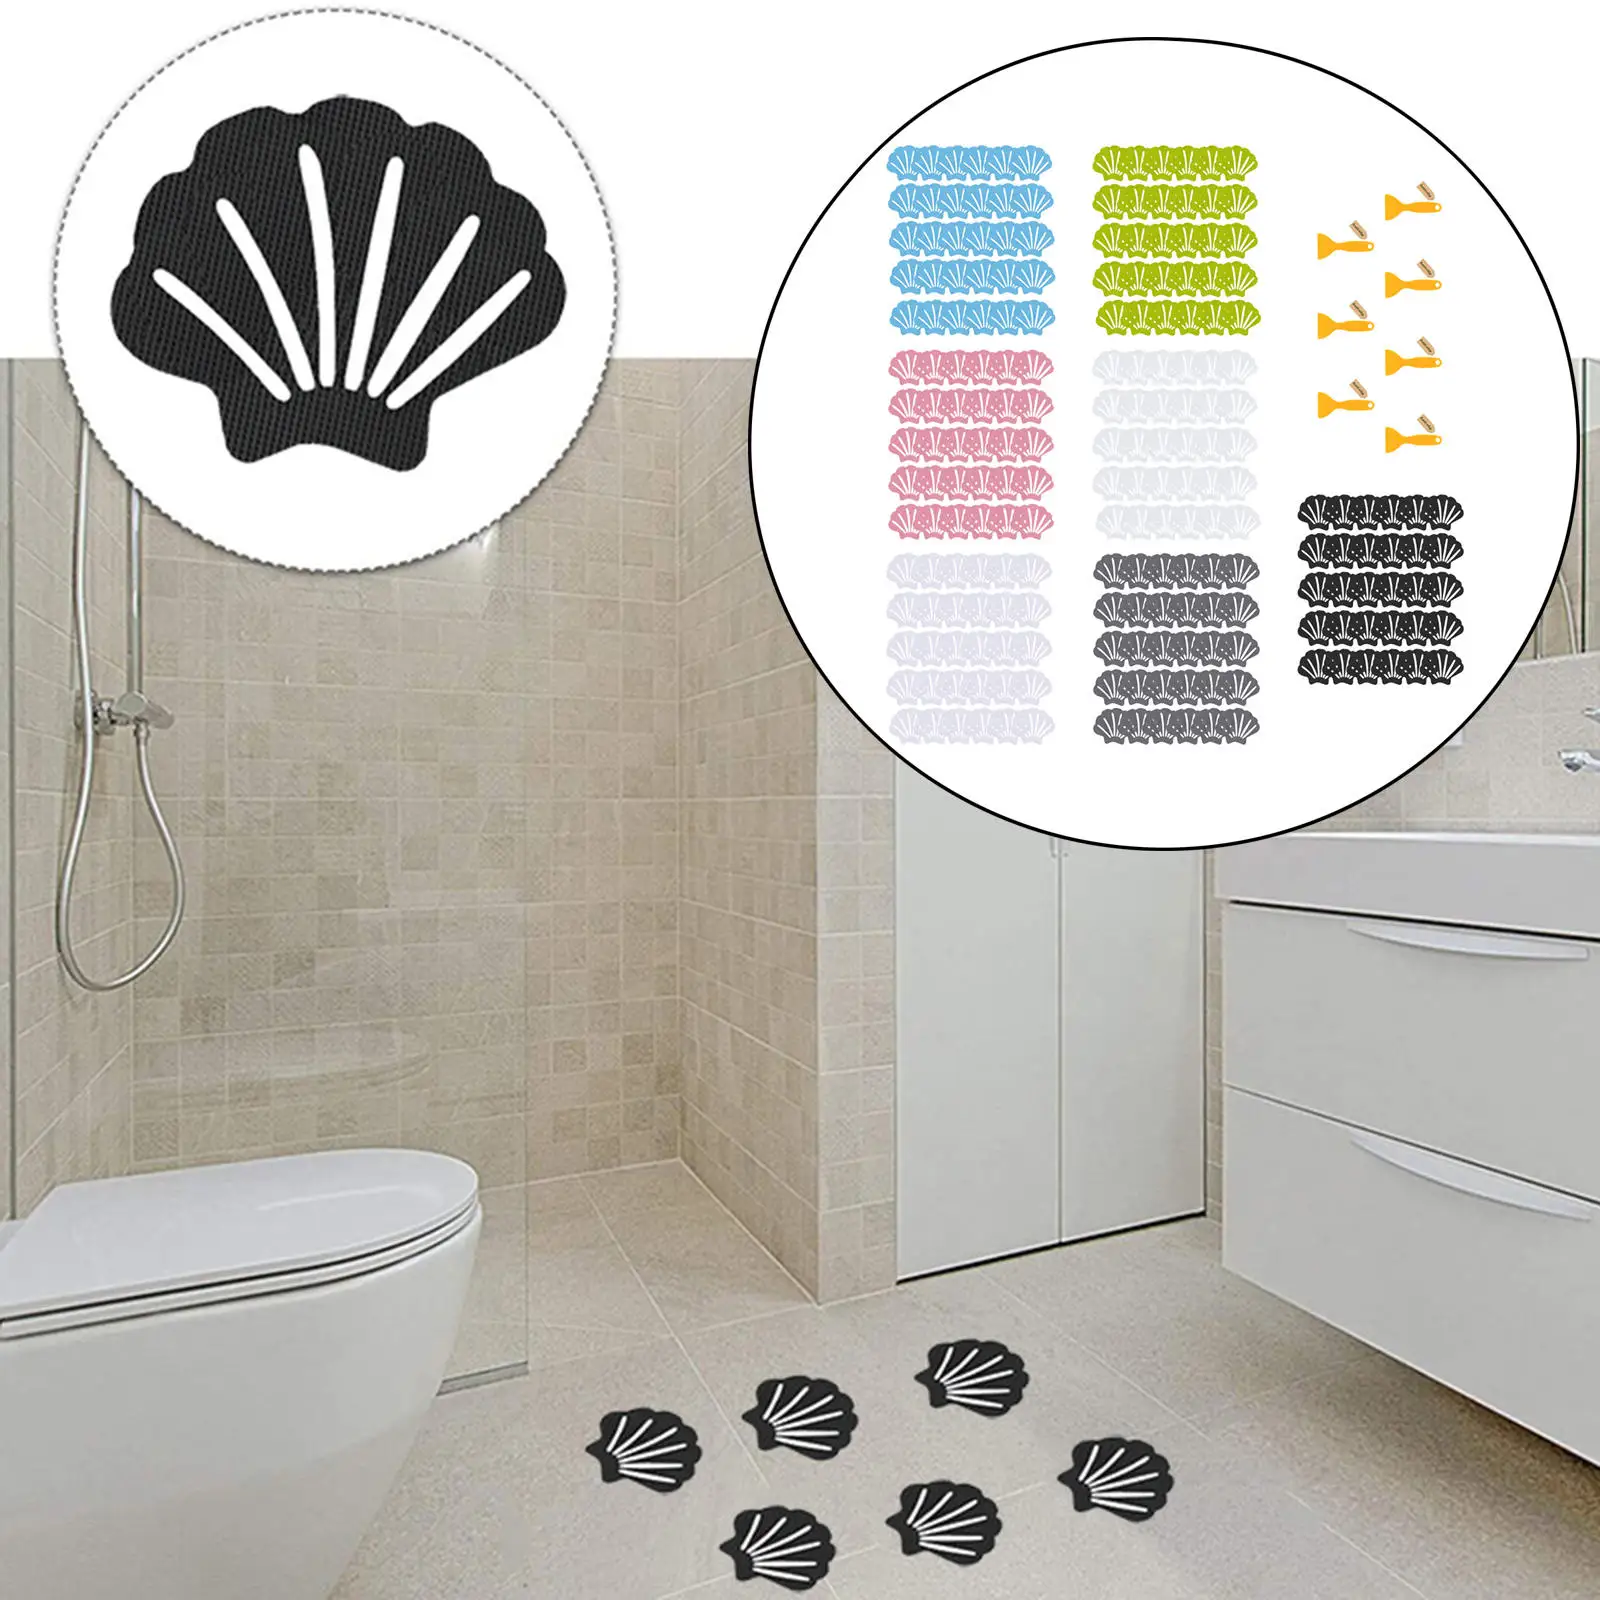 Waterproof Anti Slip Grip Strips Bathtub Slip Stickers Non Skid Adhesive Shower~ 